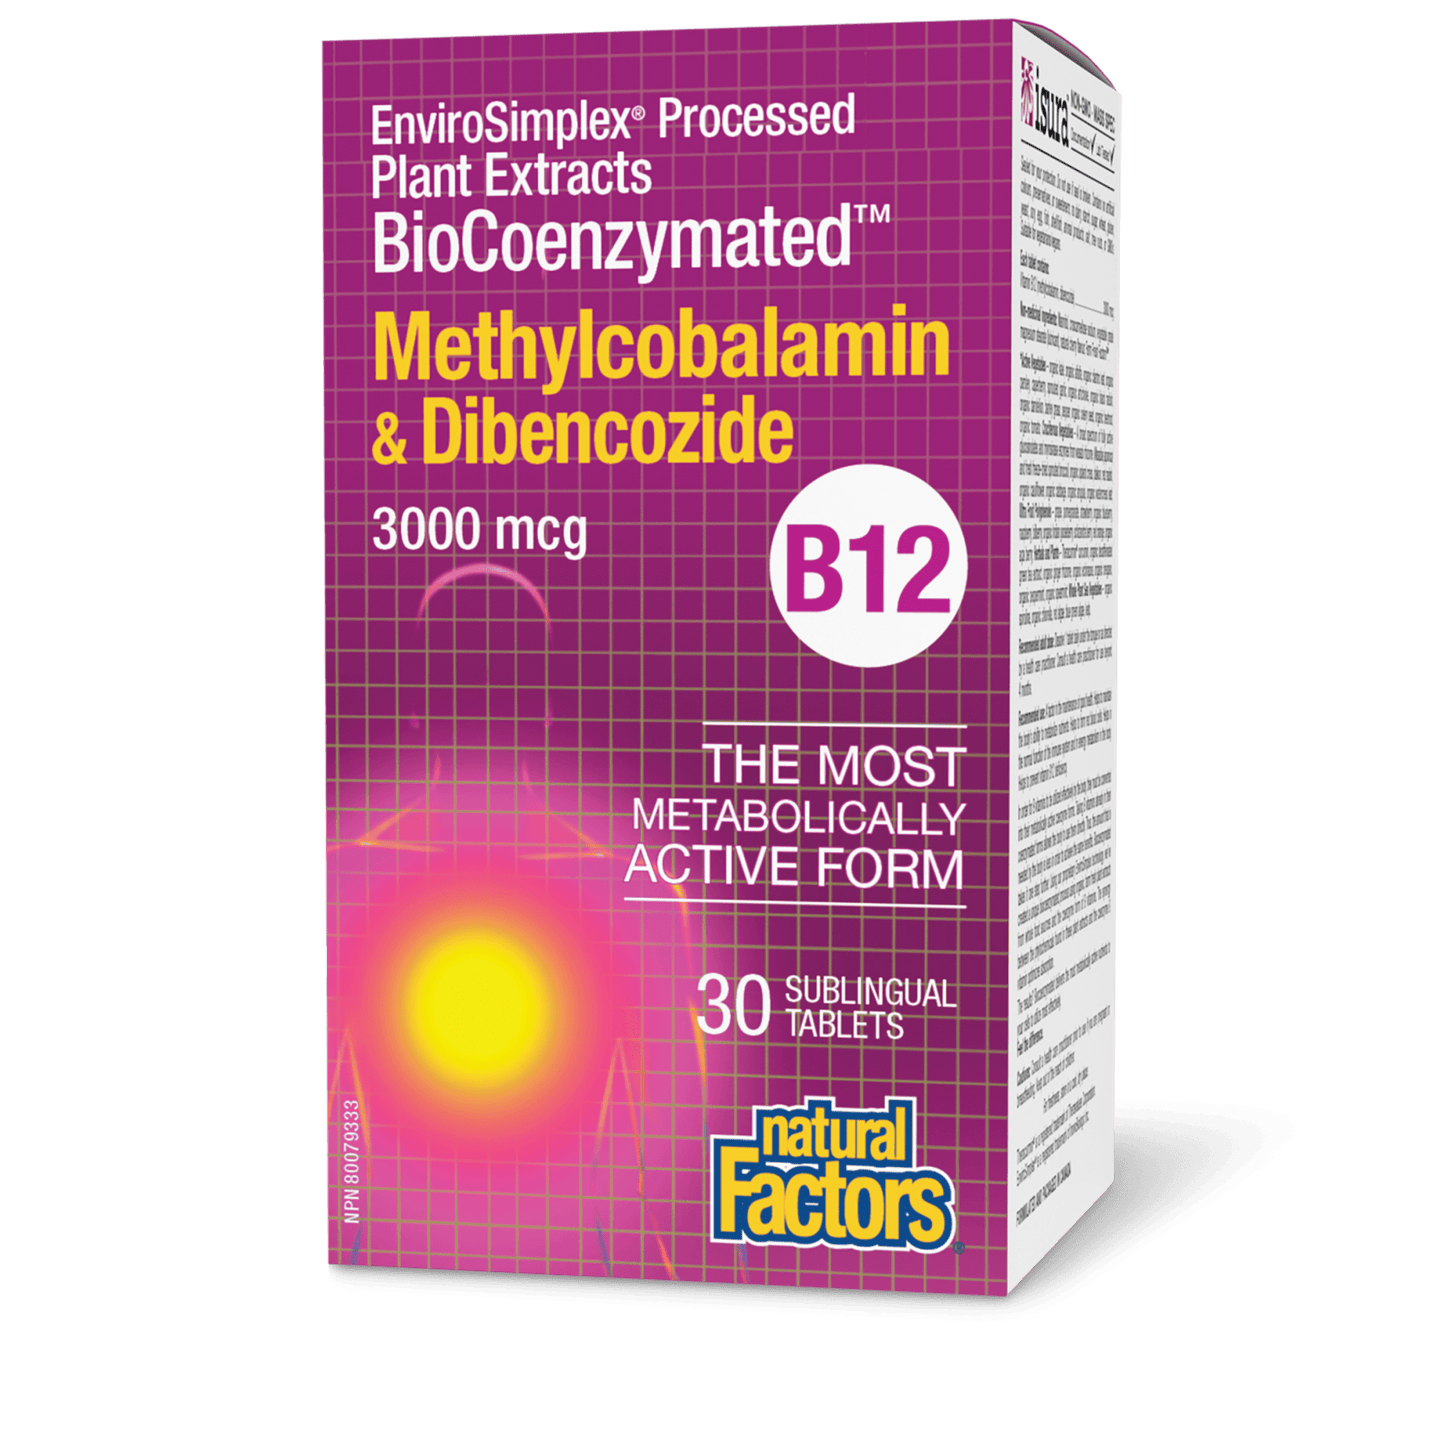 BioCoenzymated Methylcobalamin & Dibencozide • B12 3000 mcg, Natural Factors|v|image|1253